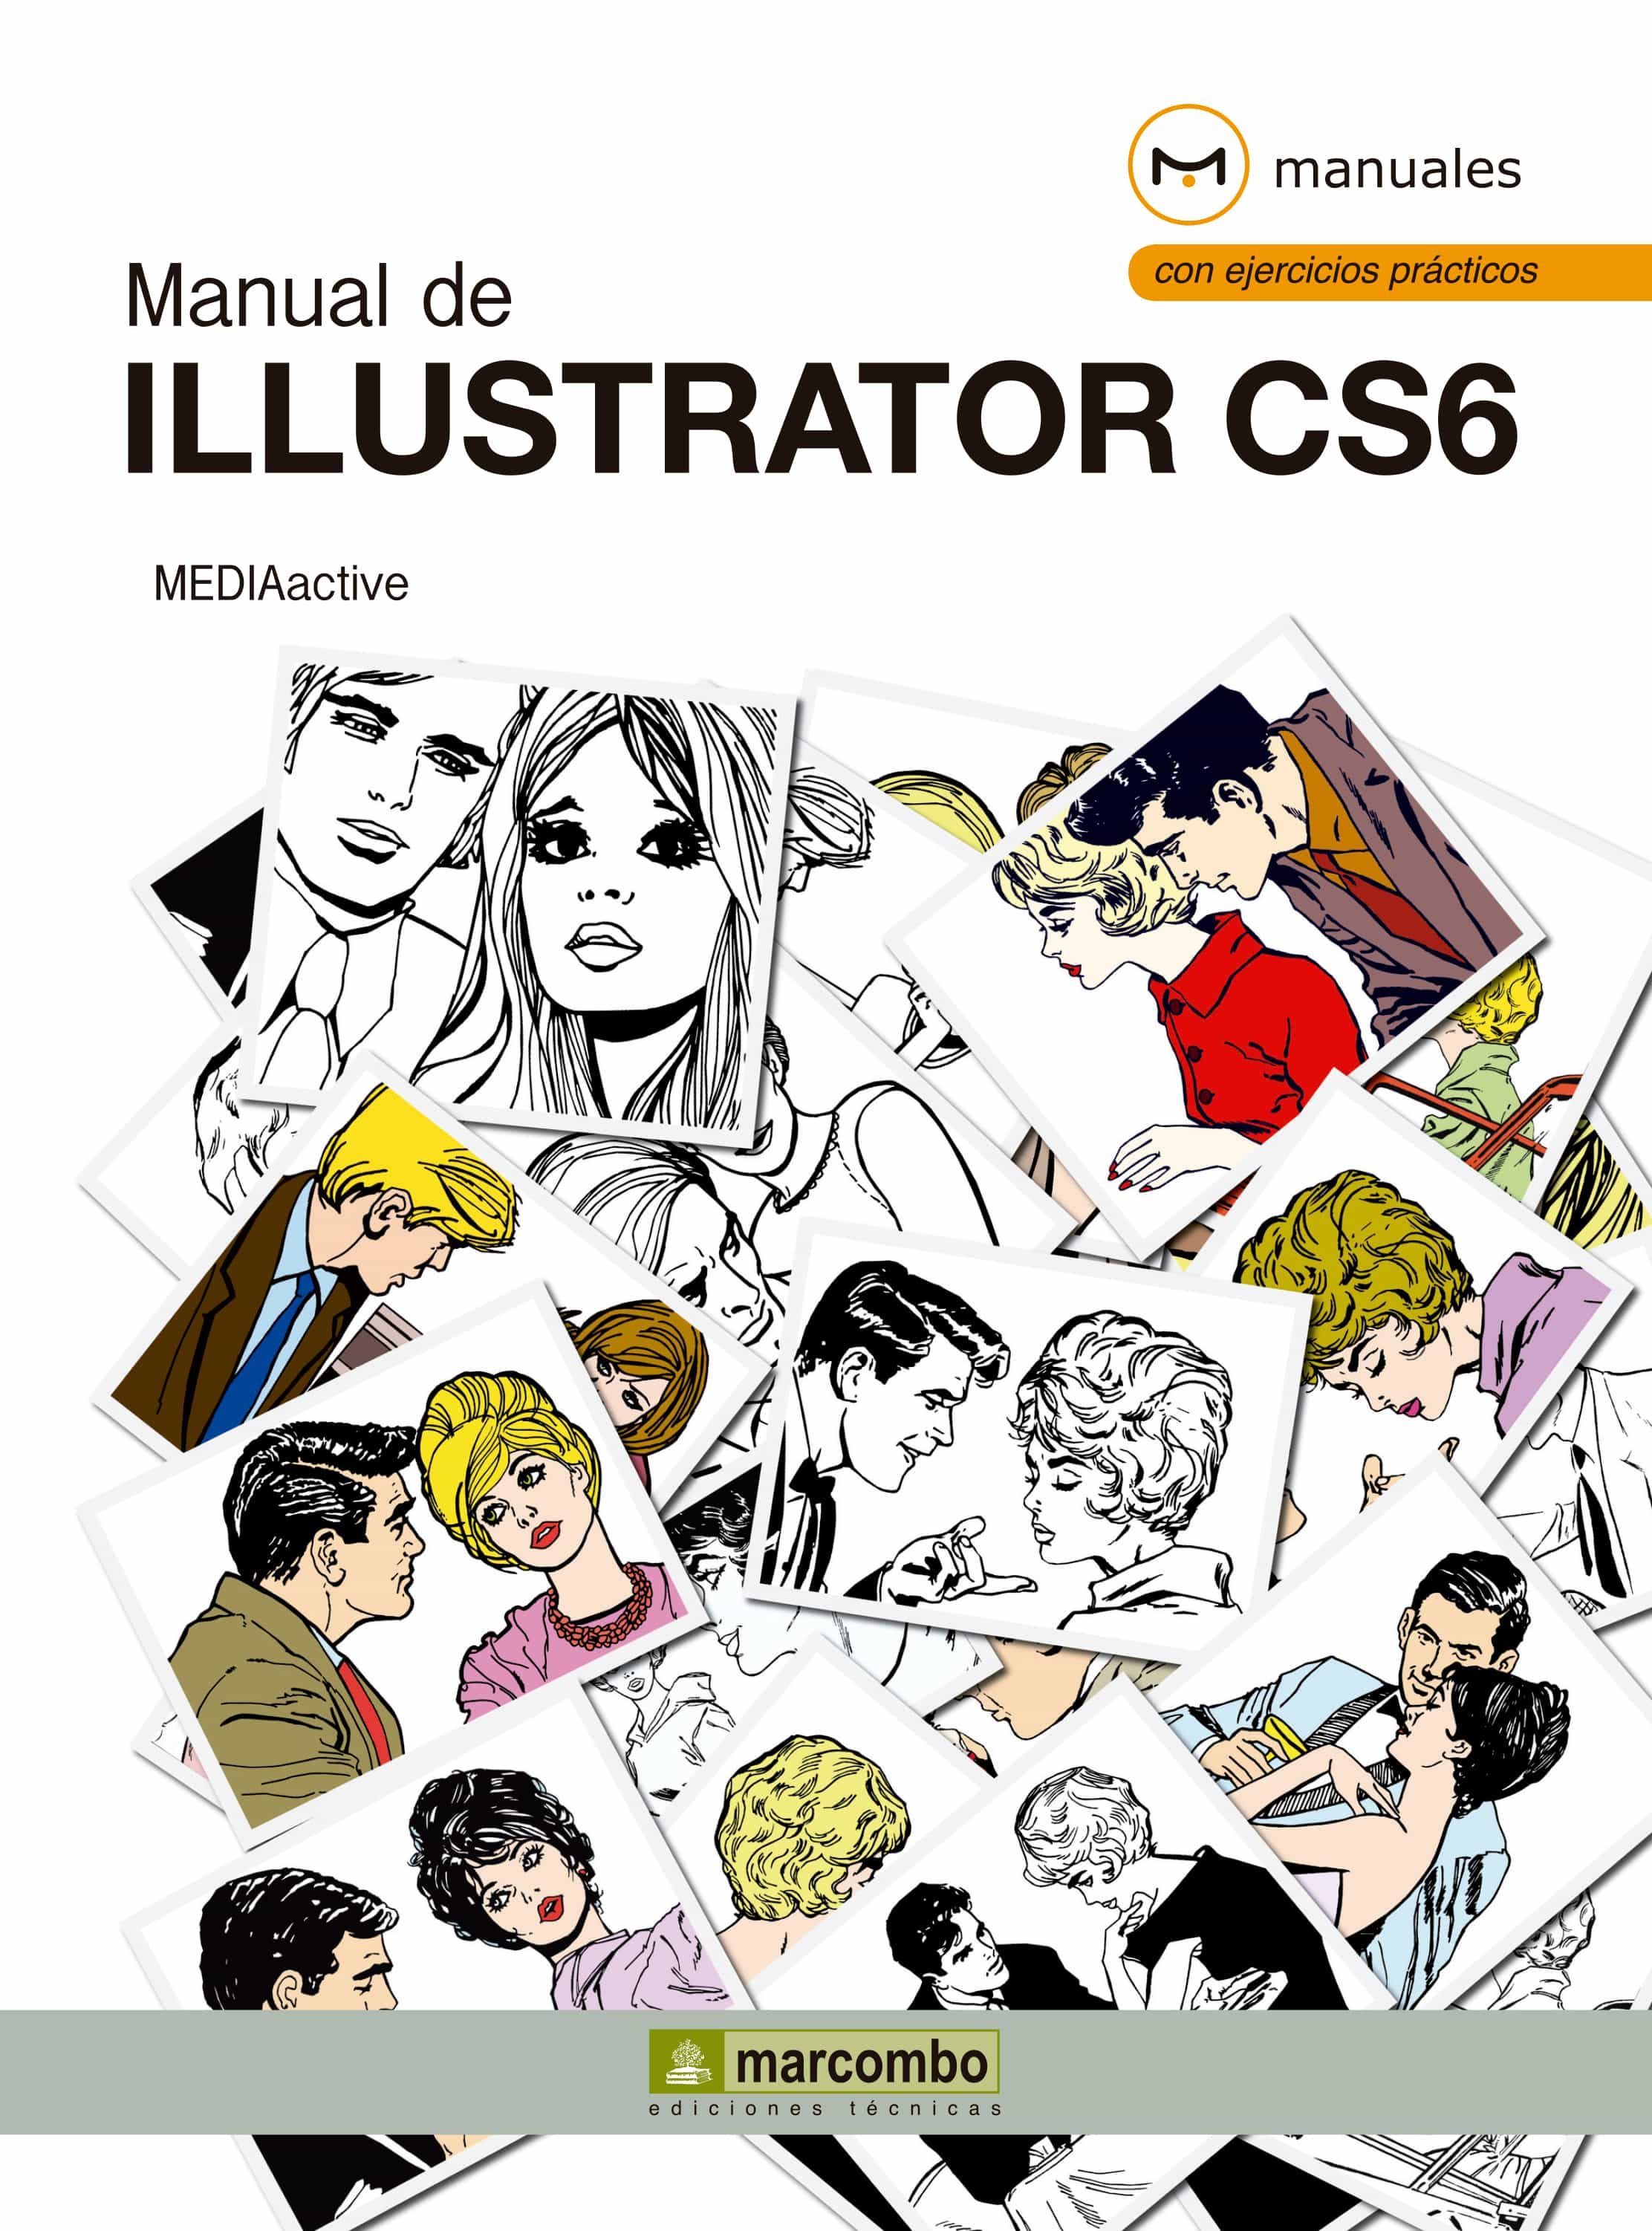 adobe illustrator cs6 ebook download